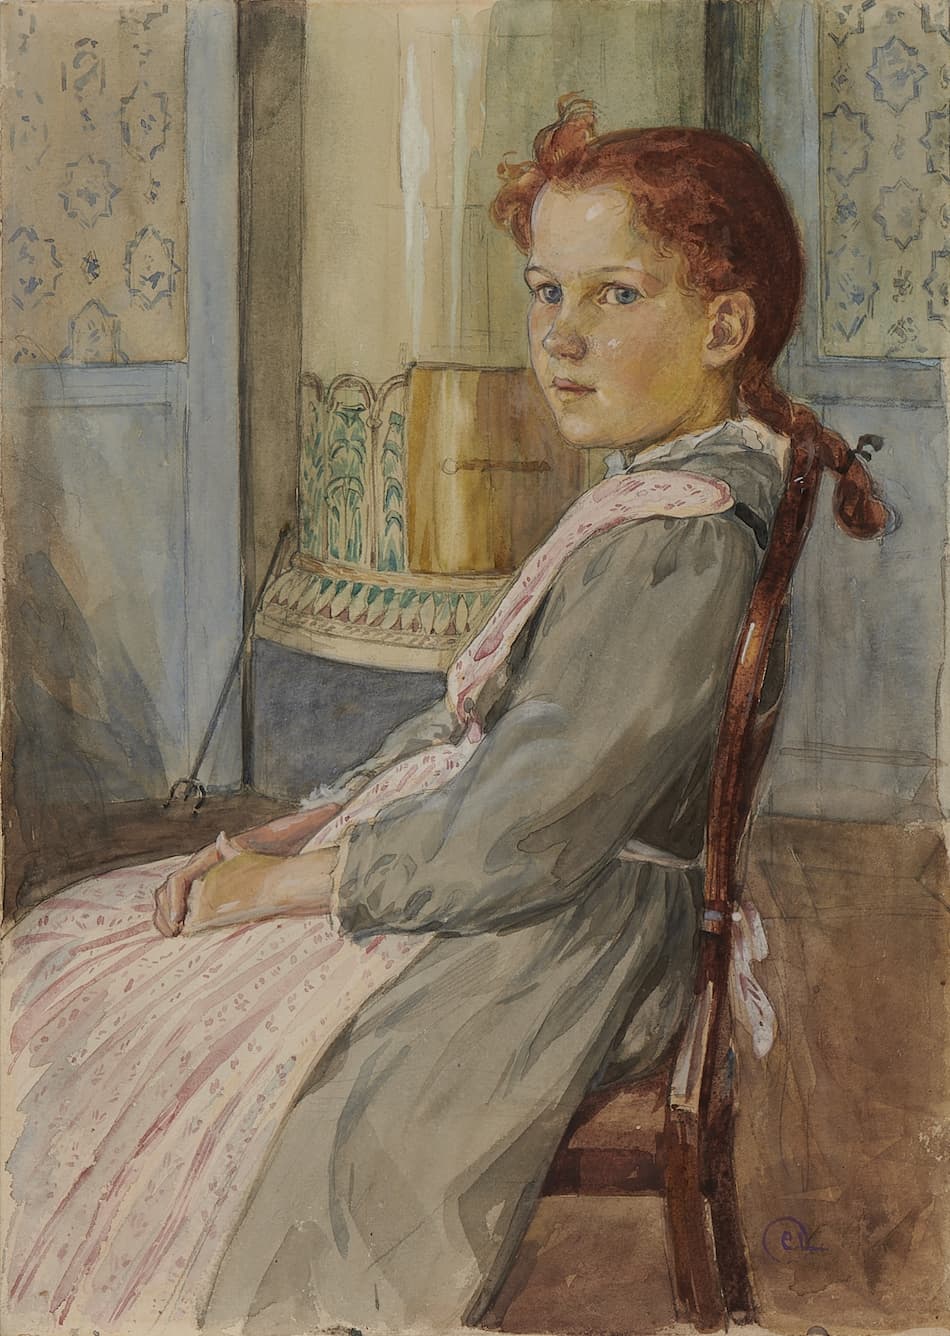 Carl Olof LARSSON, Jeune fille assise